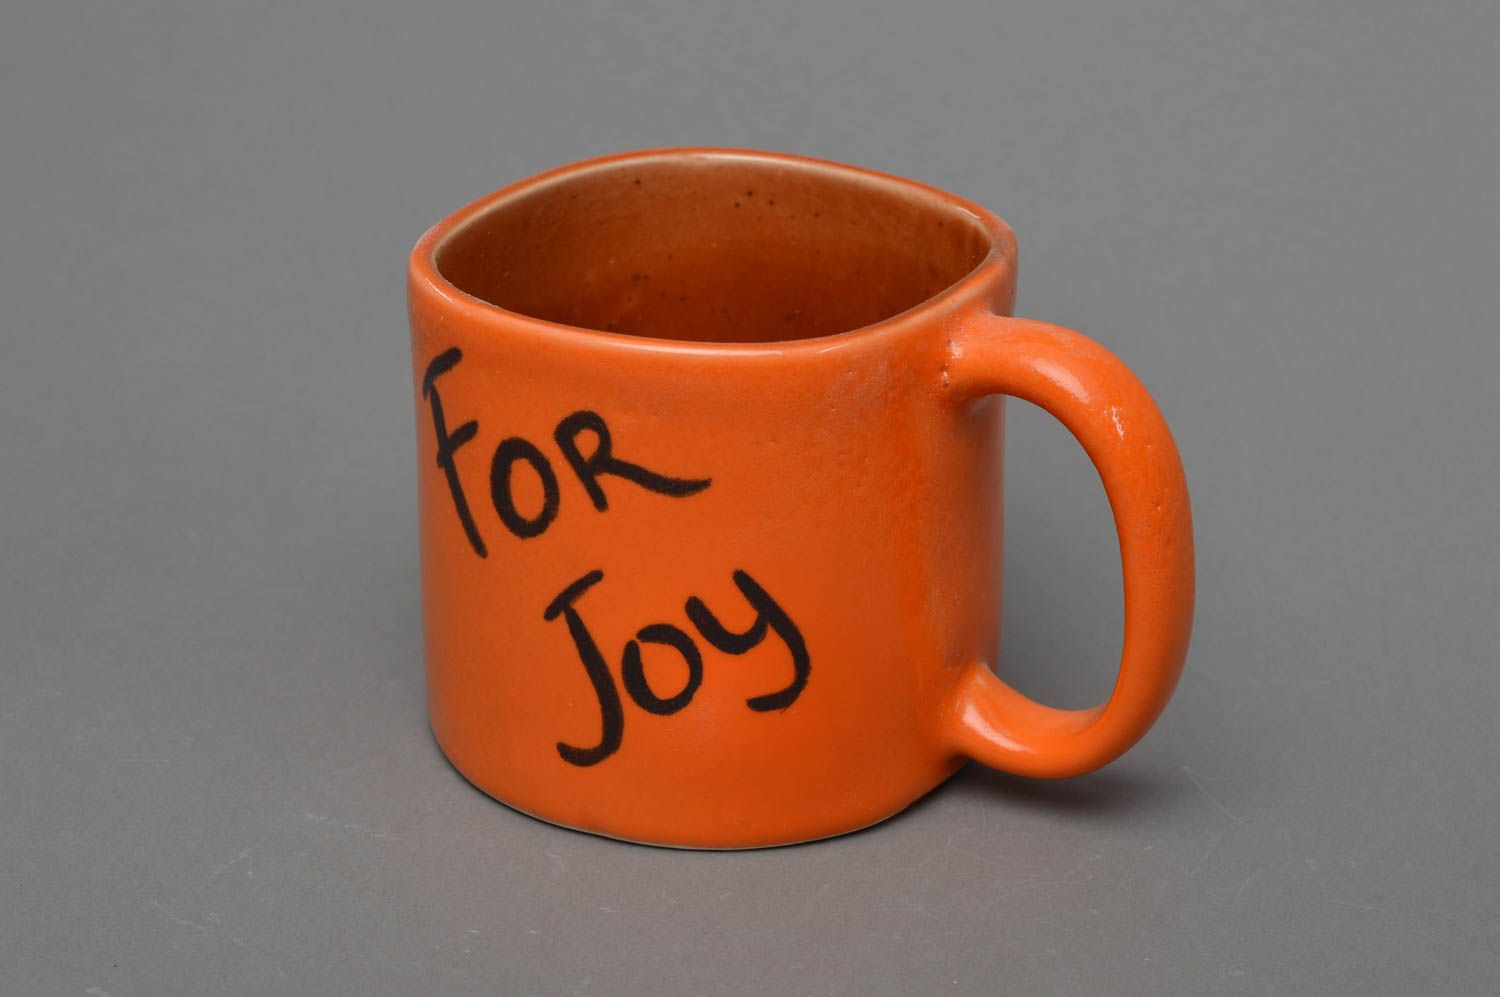 Tasse en porcelaine faite main orange avec smiley et inscription For Joy photo 1